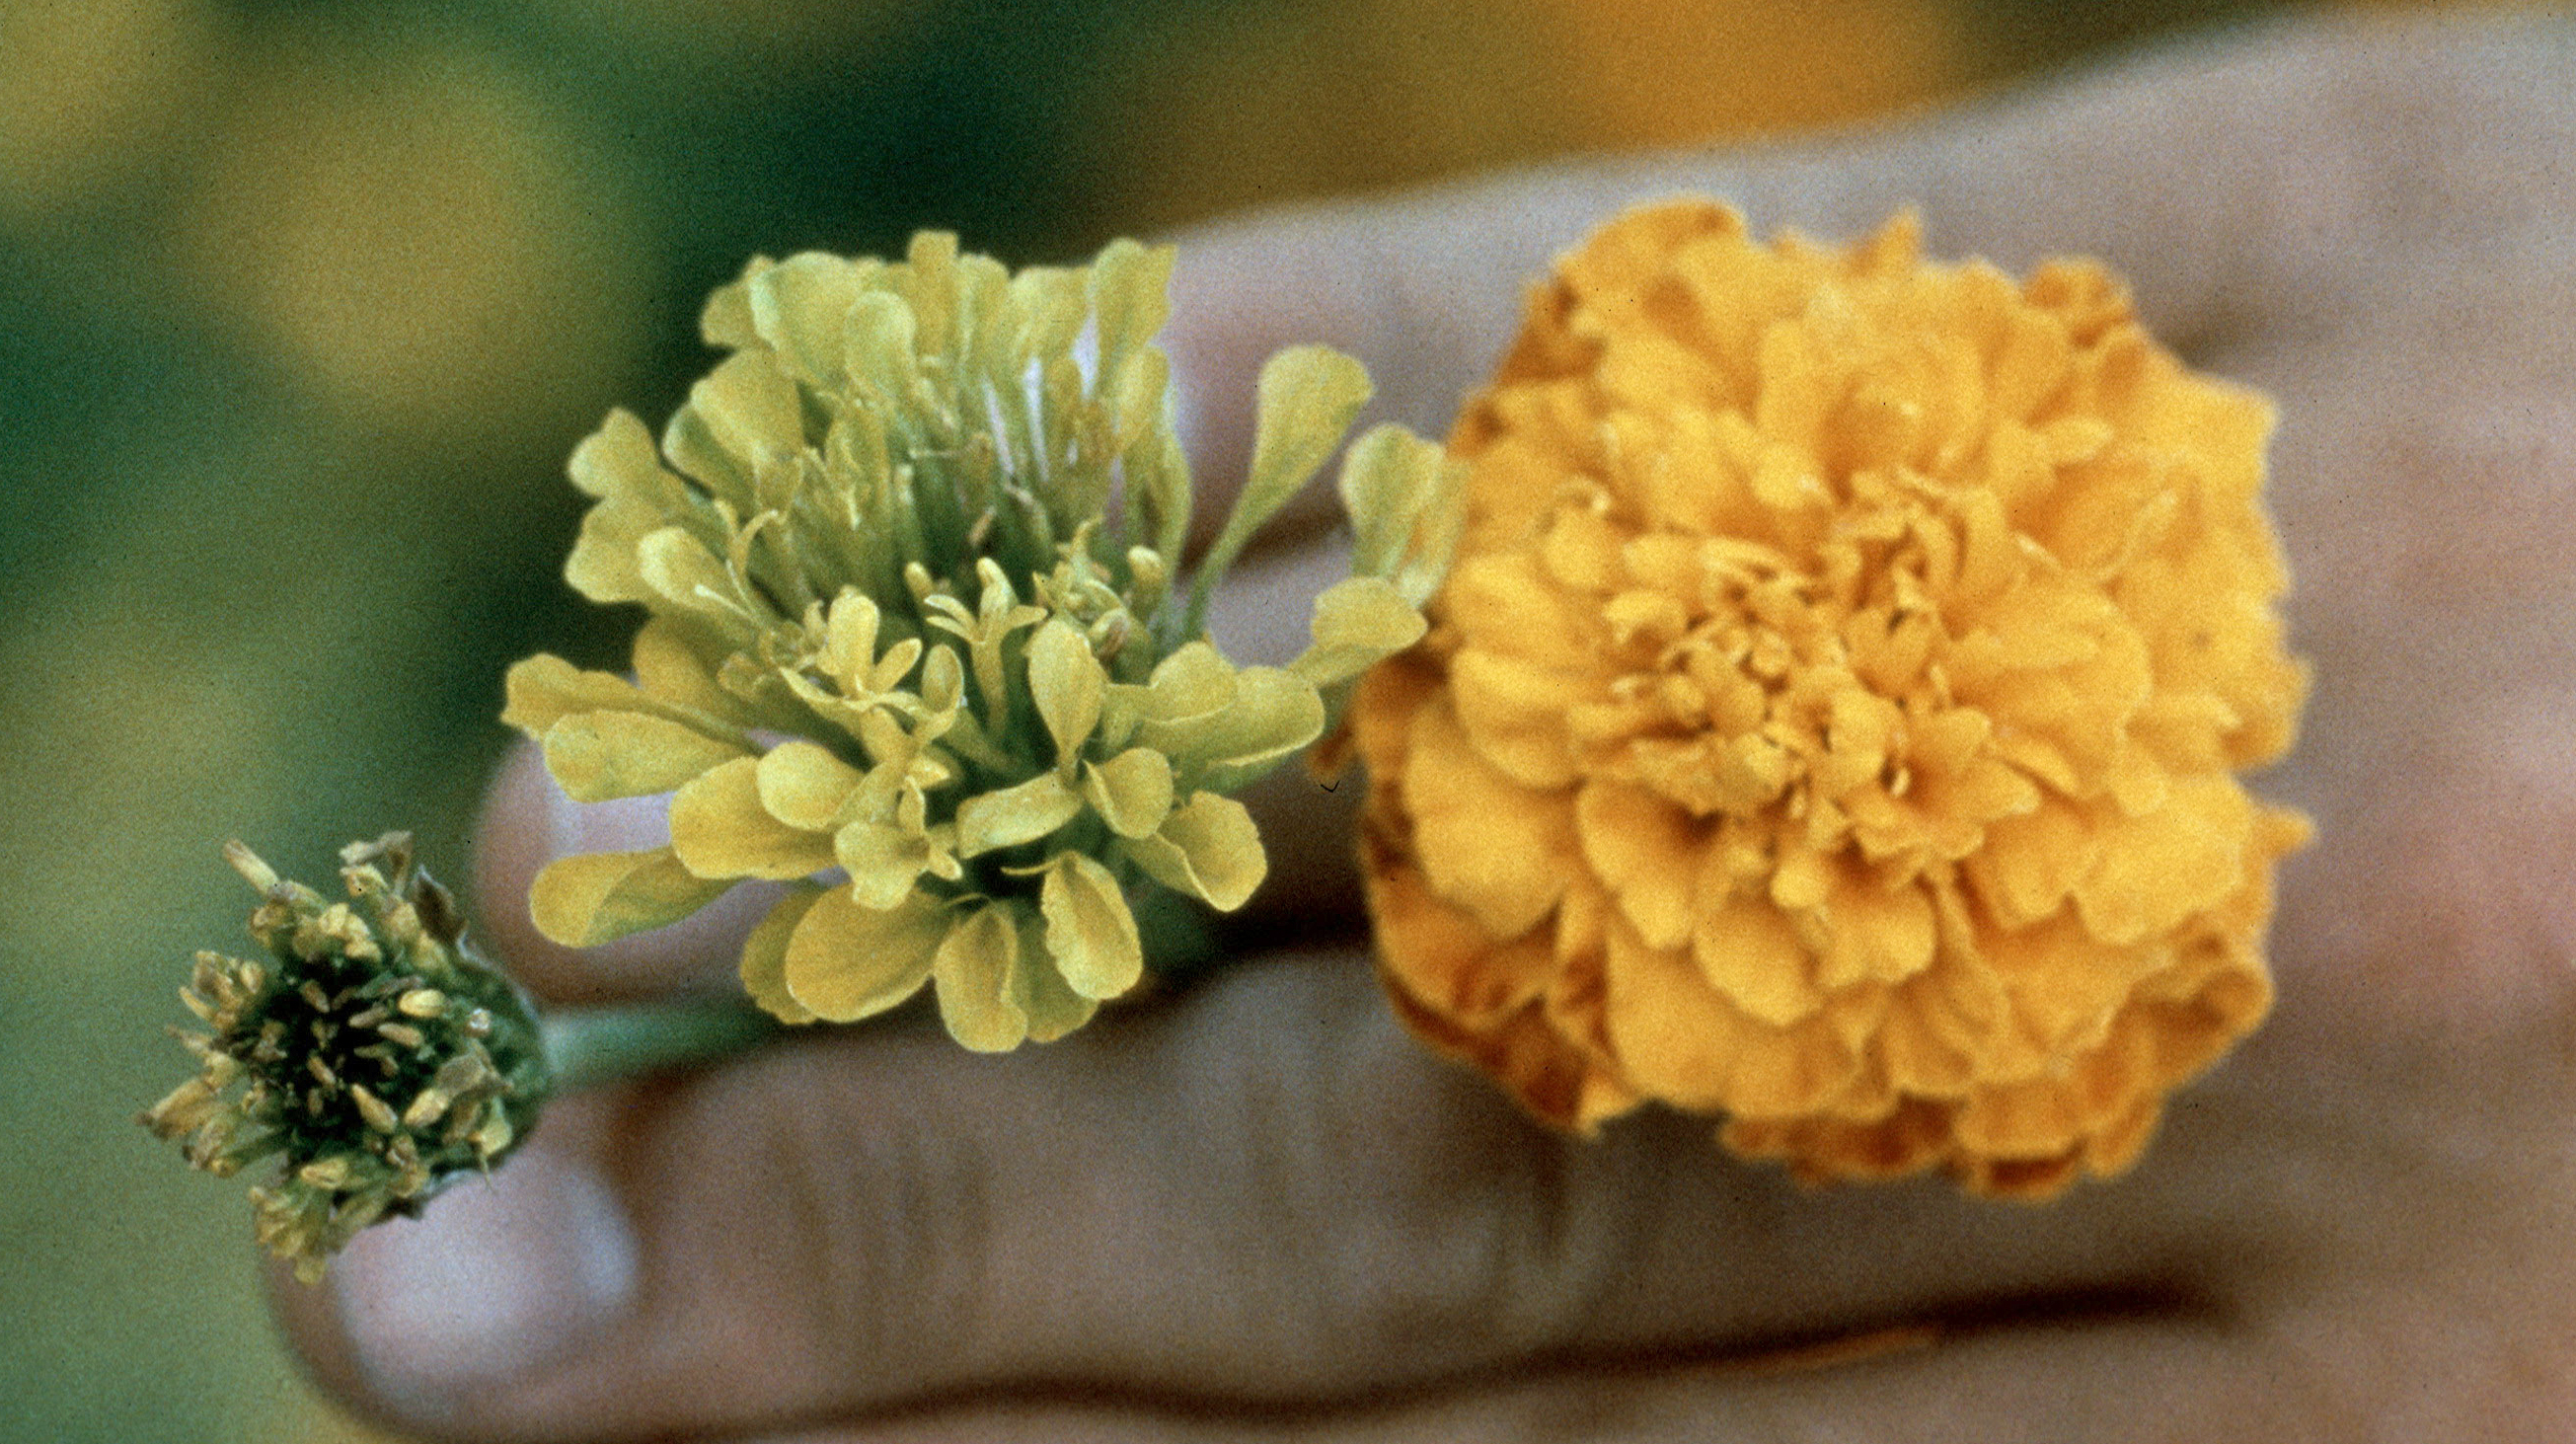 Zombie Plants Marigold the Budding Dead Phytoplasma attack